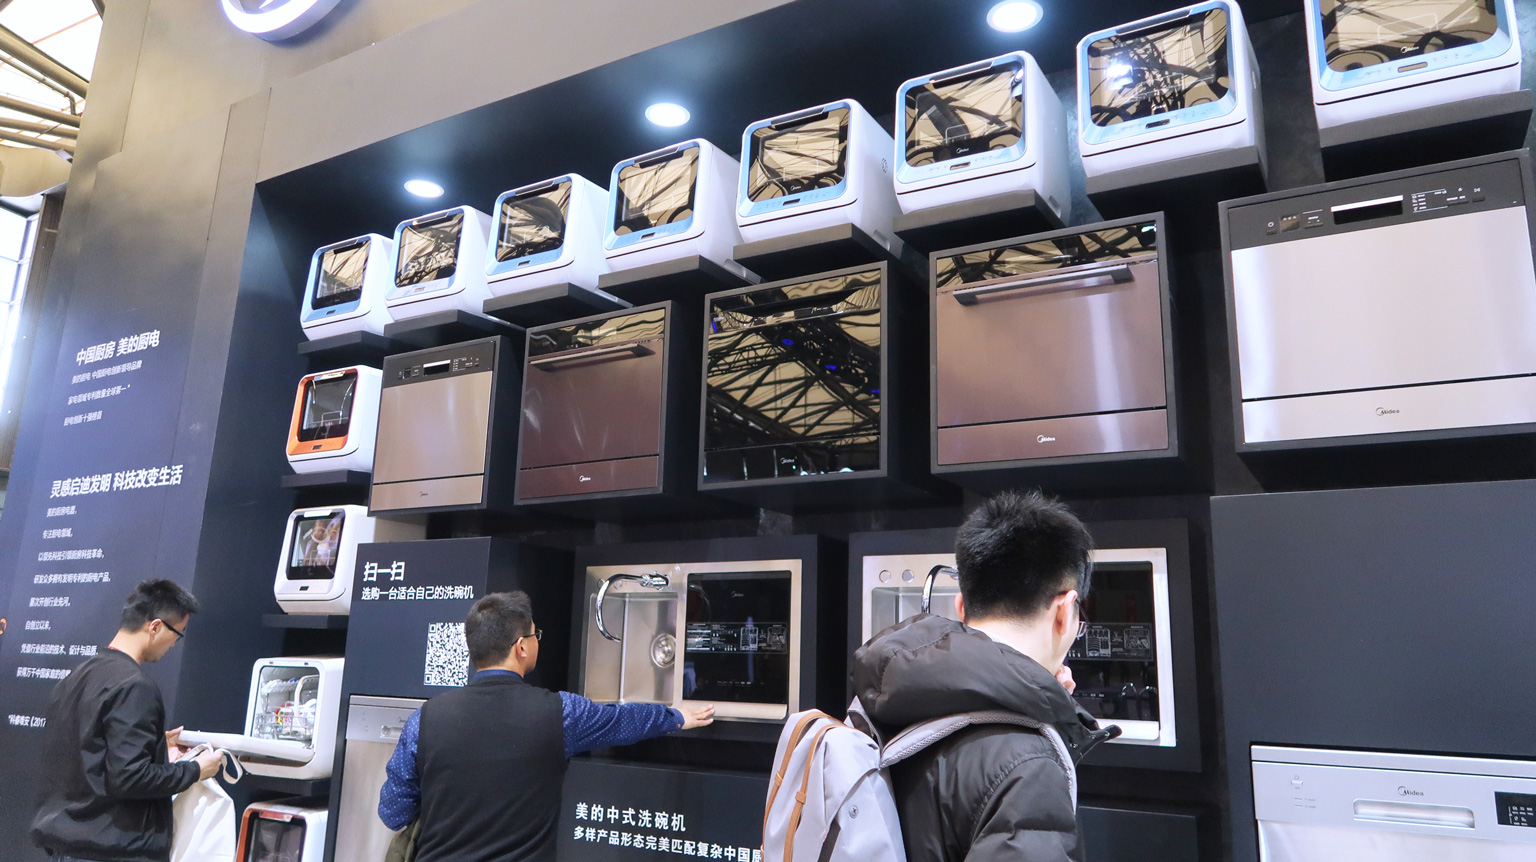 AWE Shanghai 2018 Small domestic appliances